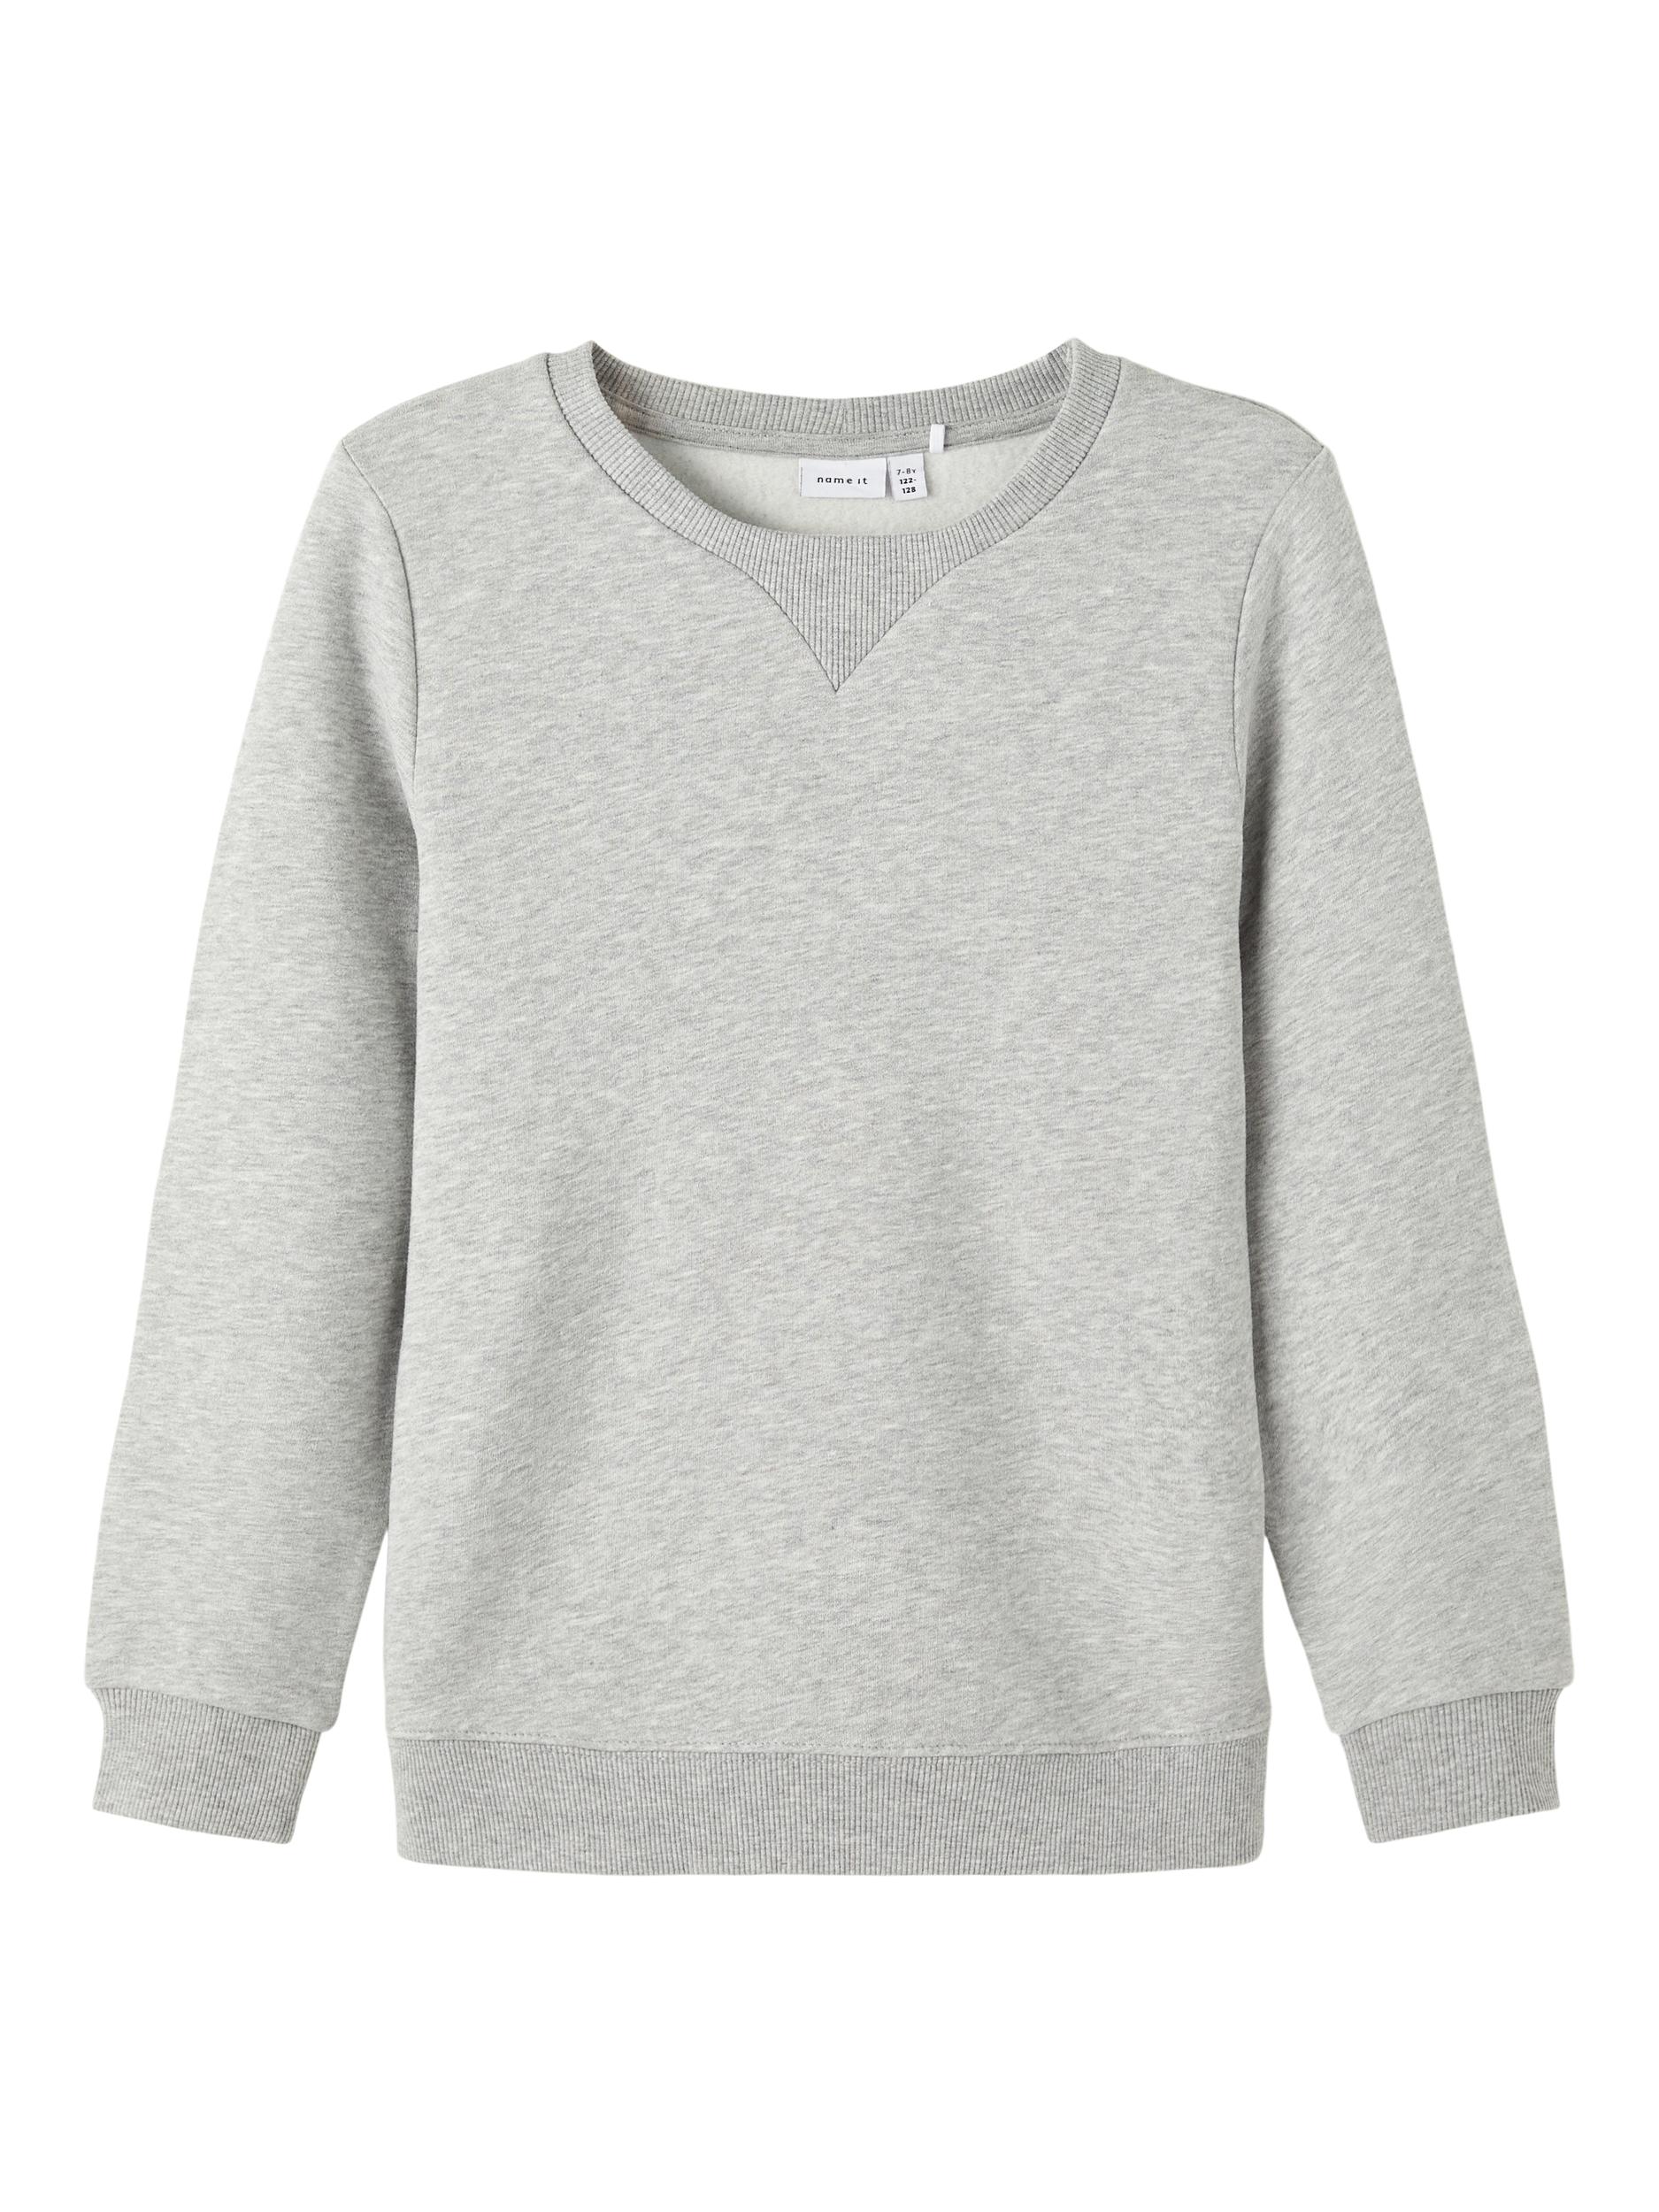 Leno Sweatshirt, Grey Melange, 134-140 cm